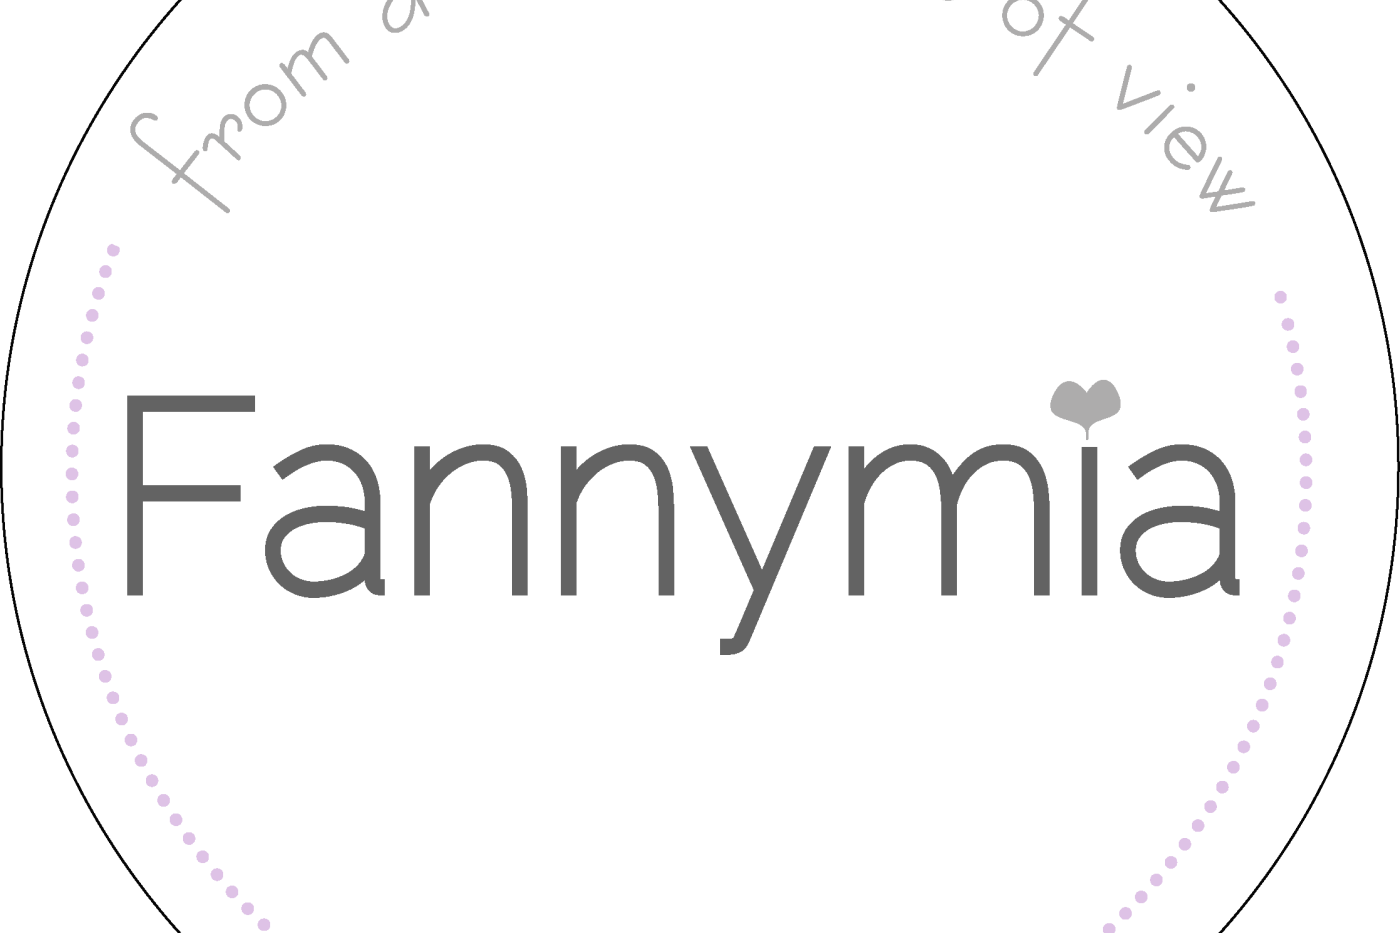 Fannymia lagersalg